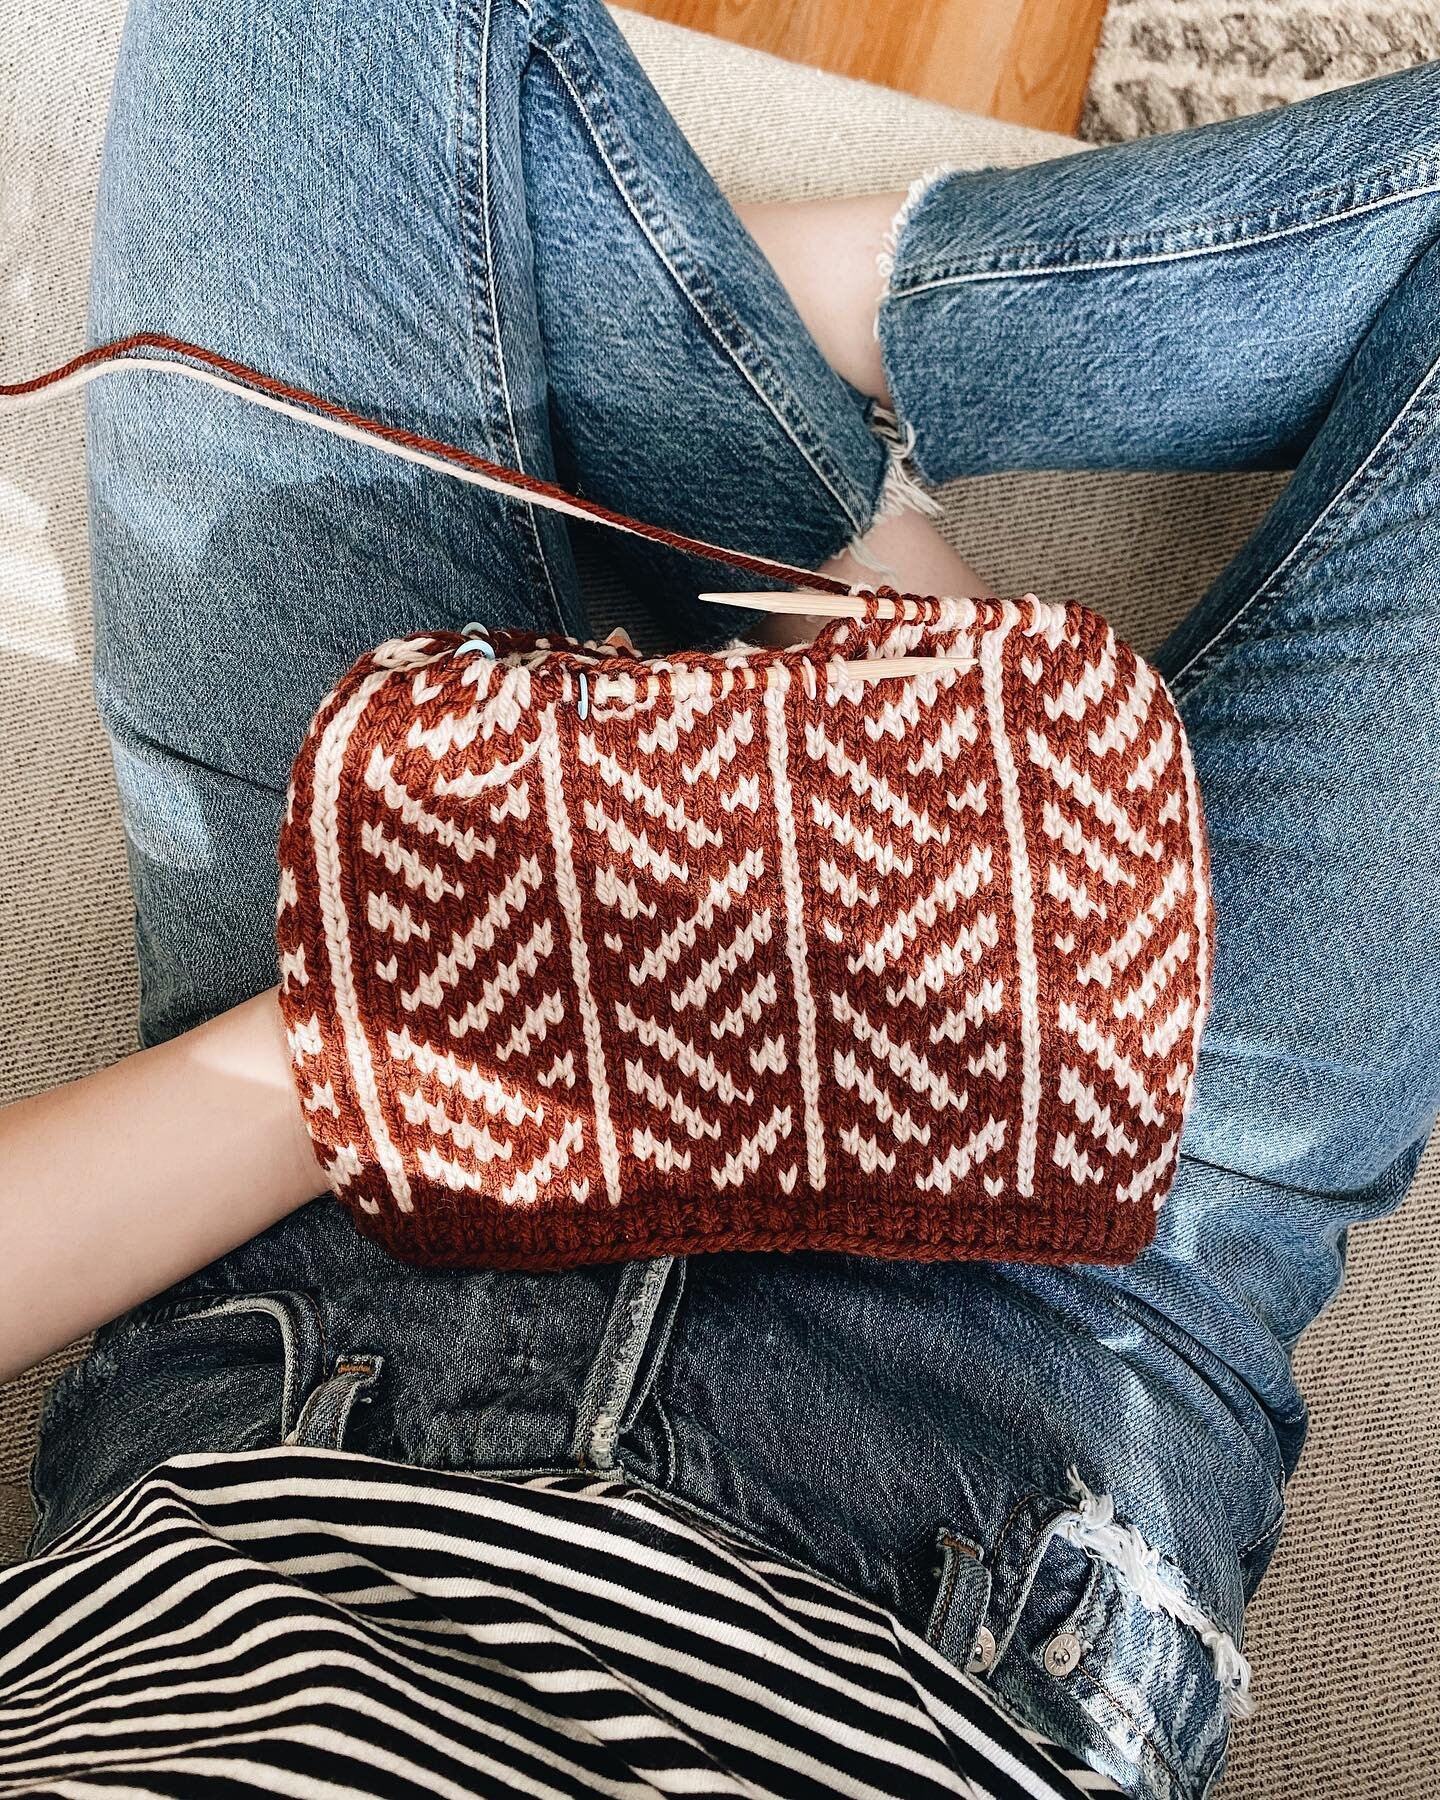 Current work in progress for this super smoky Saturday... 

#knitting #handknit #yarnlove #knittersofinstagram #weareknitters #handmade #knitter #knitstagram #nevernotknitting #shareyourknits #slowfashion